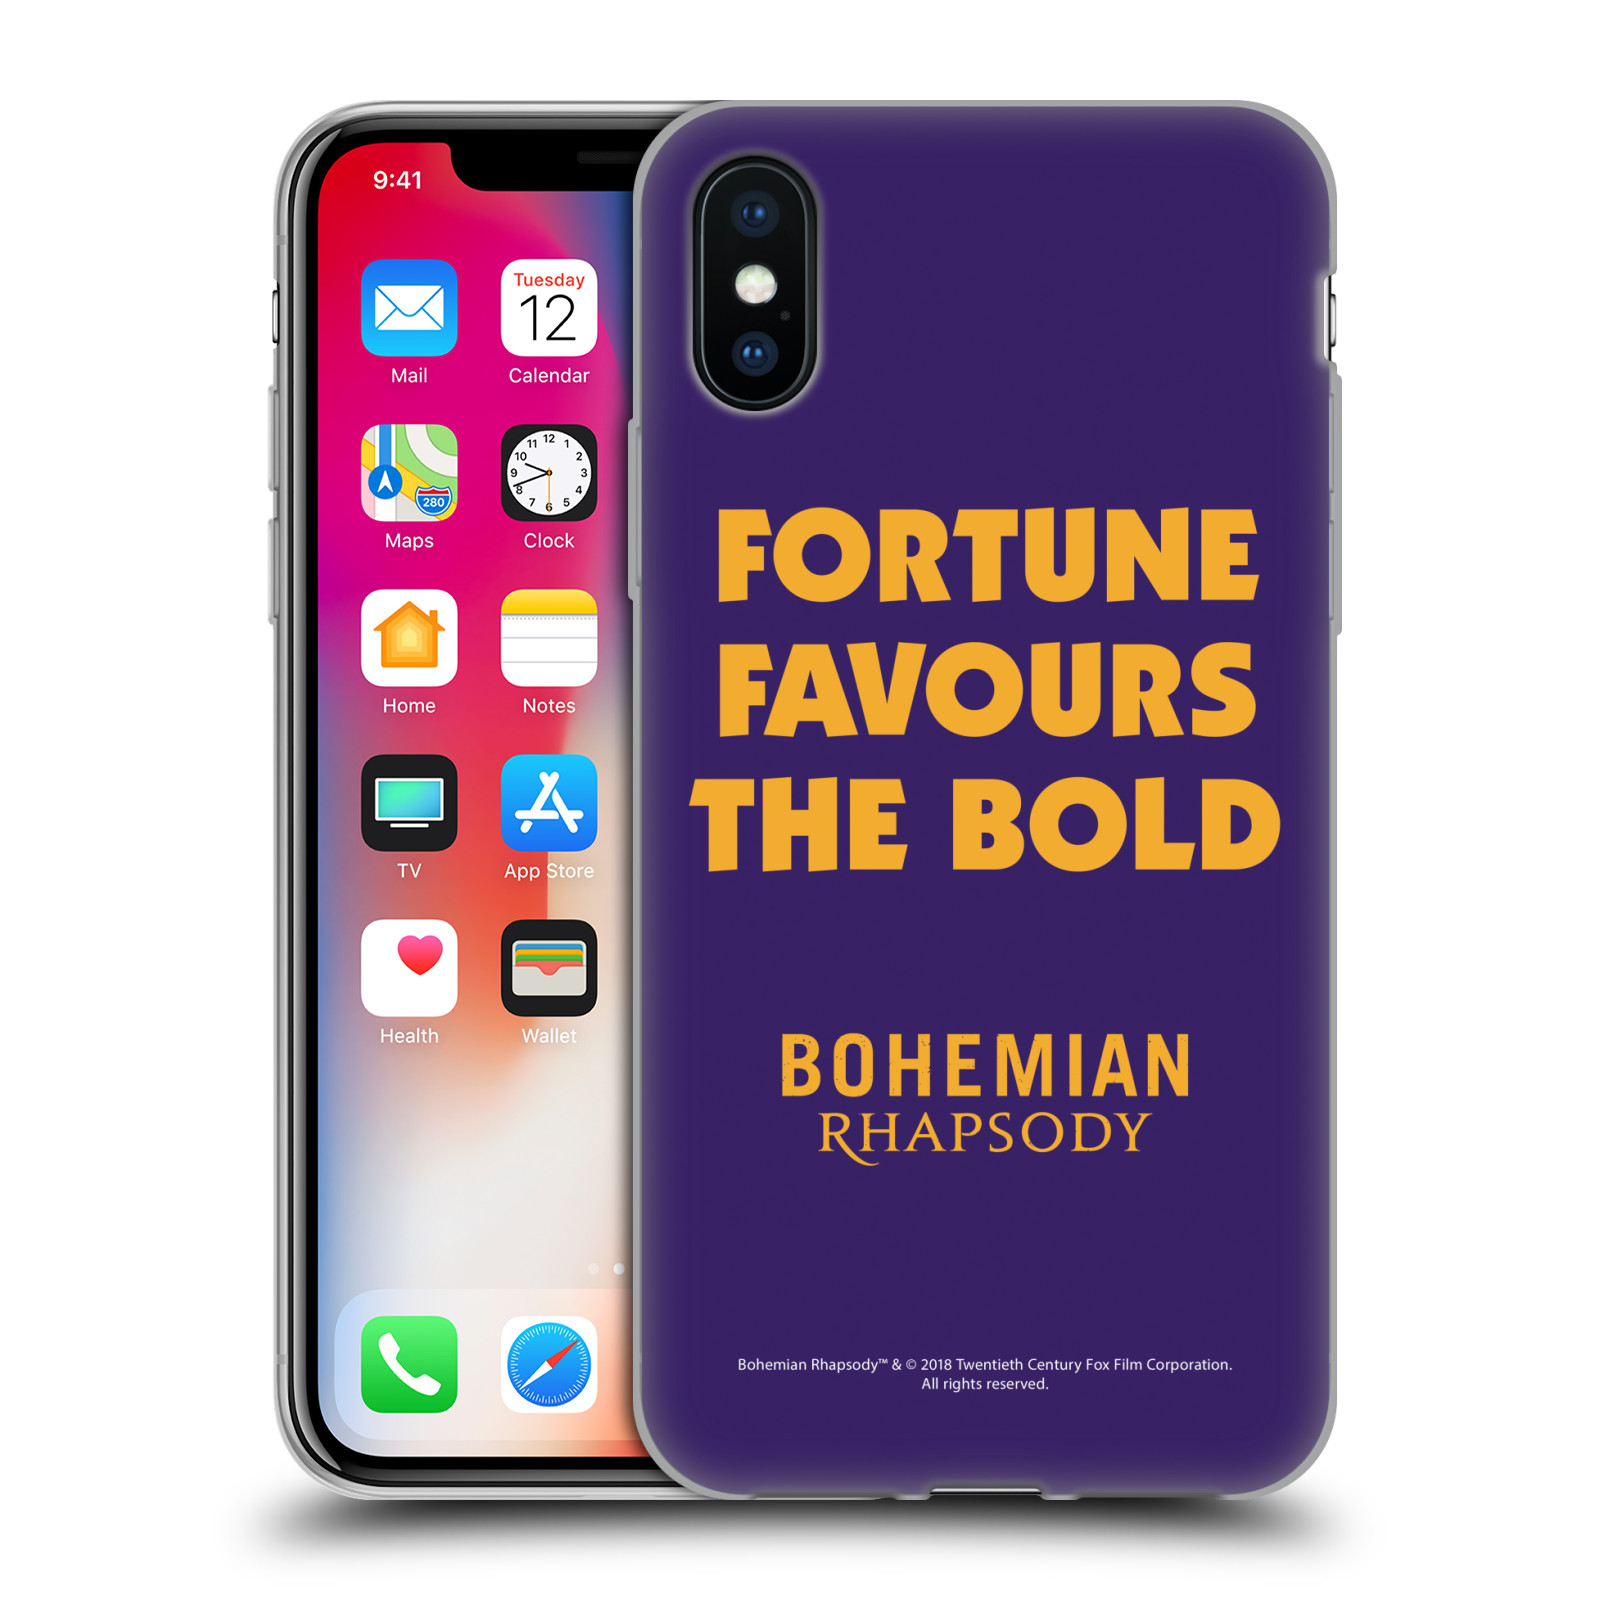 Bohemian Rhapsody for iphone download